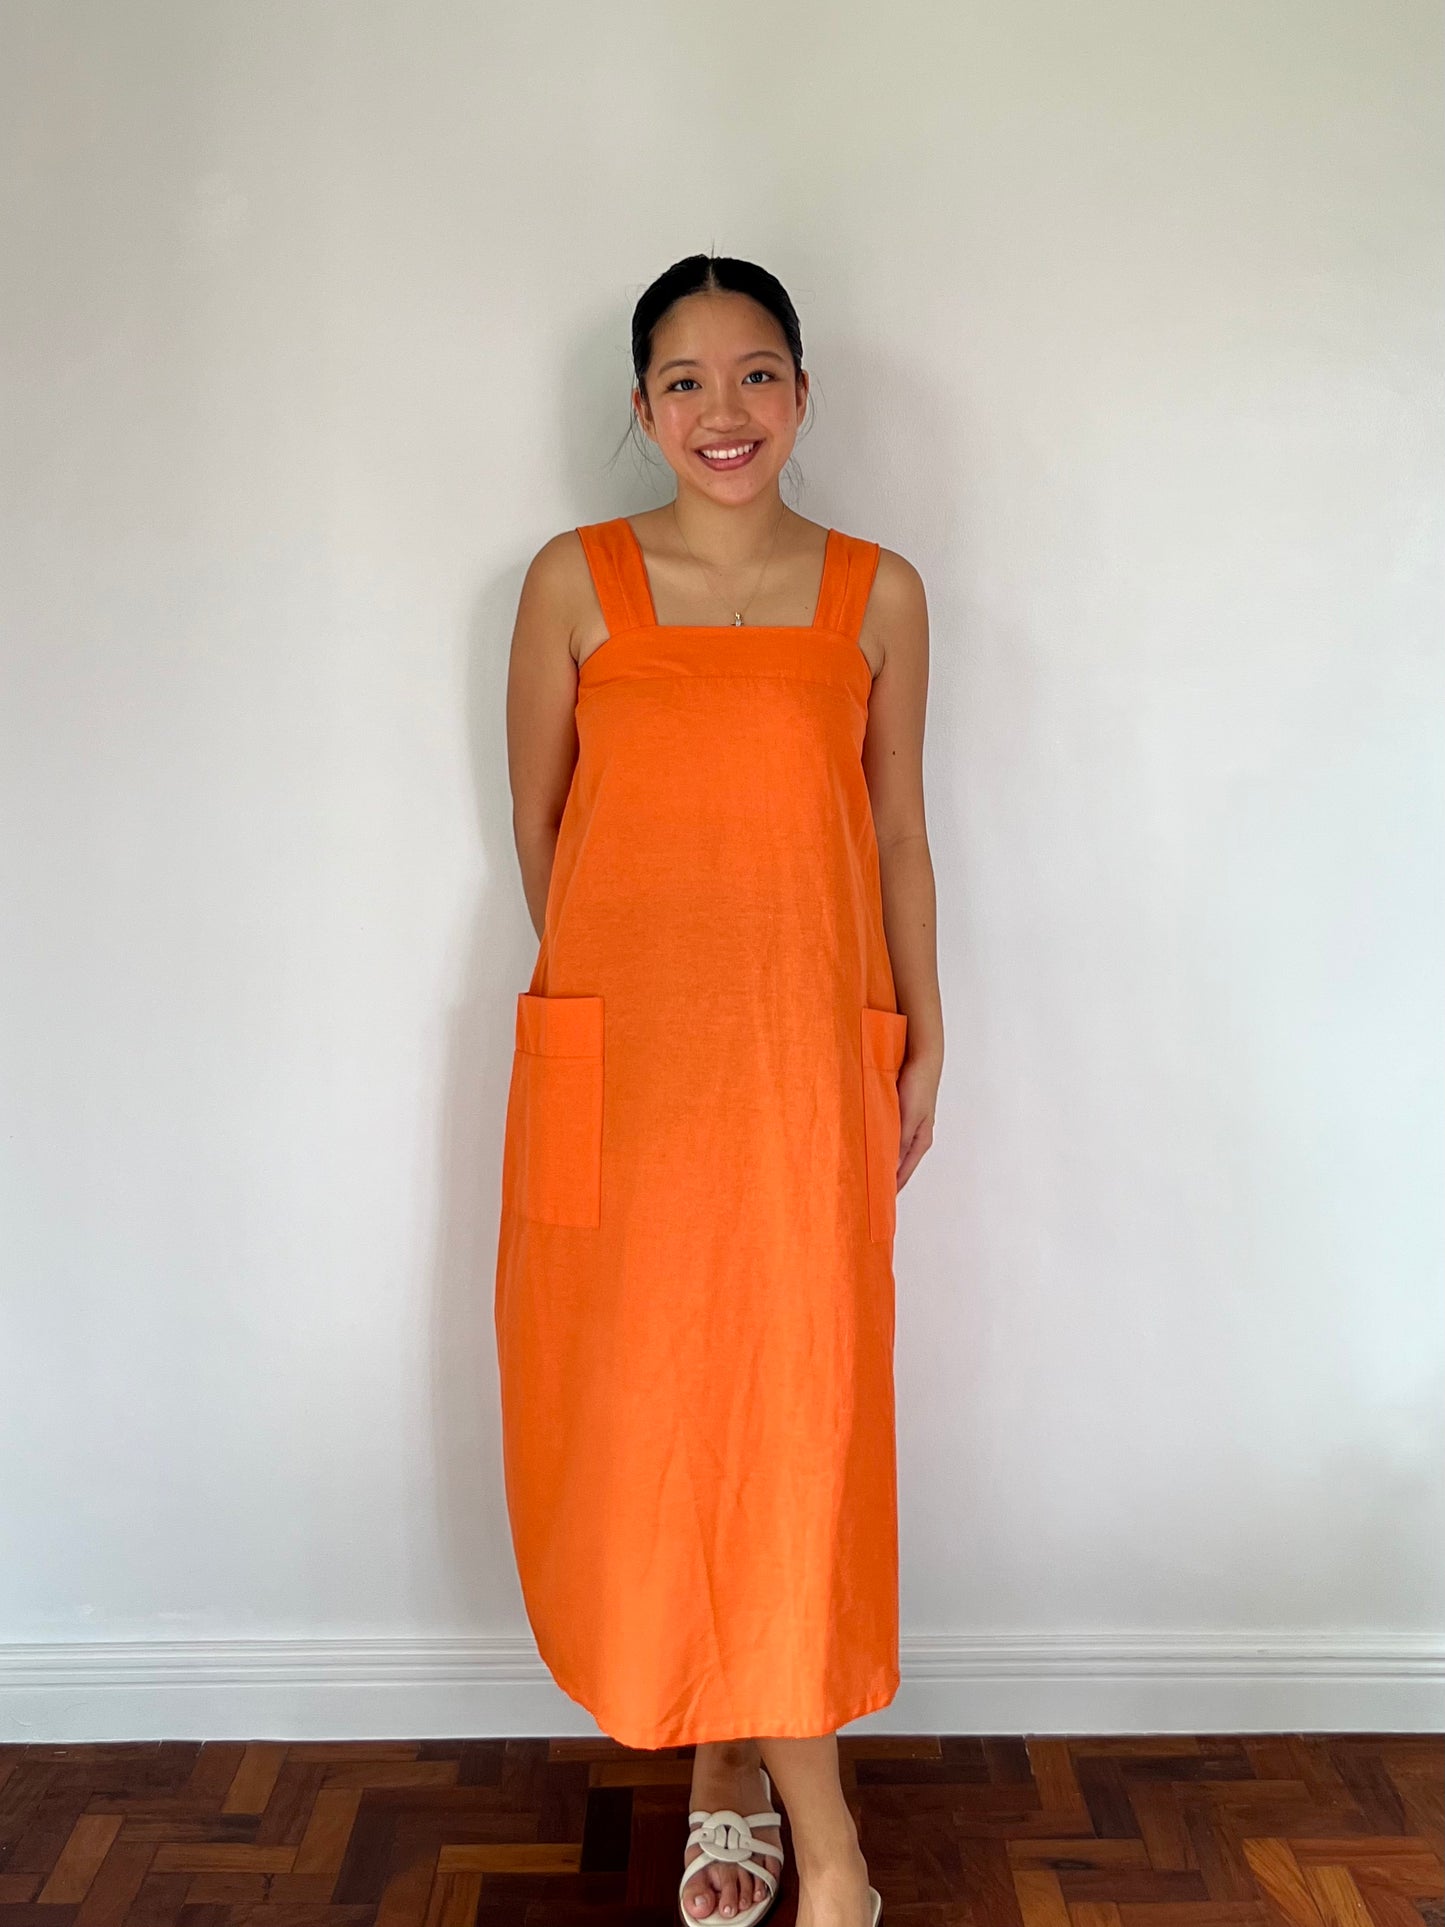 Galatia Dress in Tangerine (Short Version)